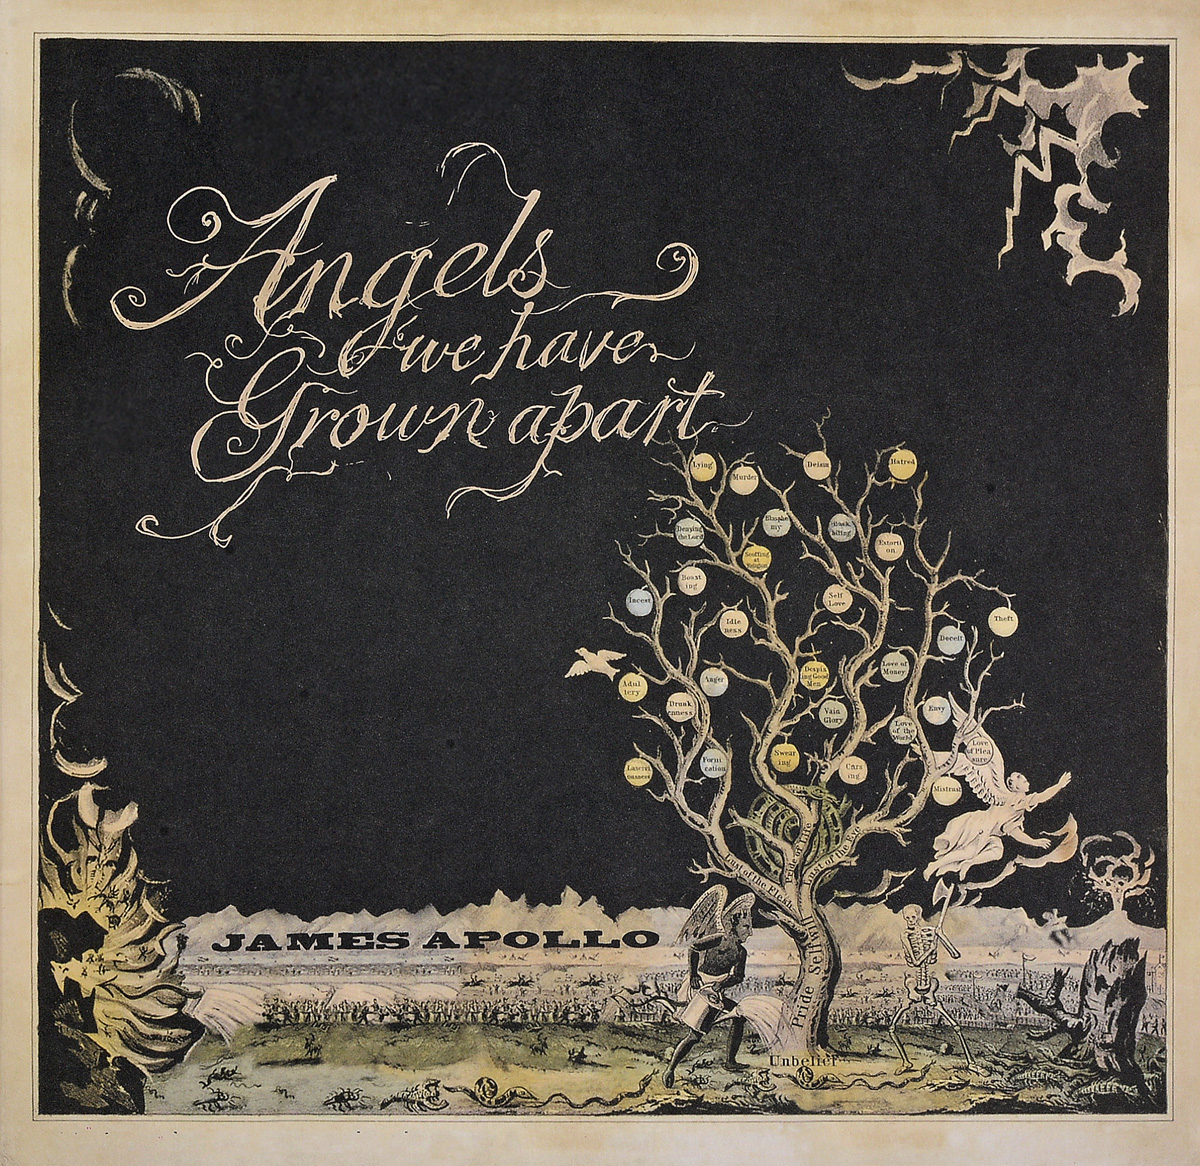 James Apollo. Angels We Have Grown Apart (LP)